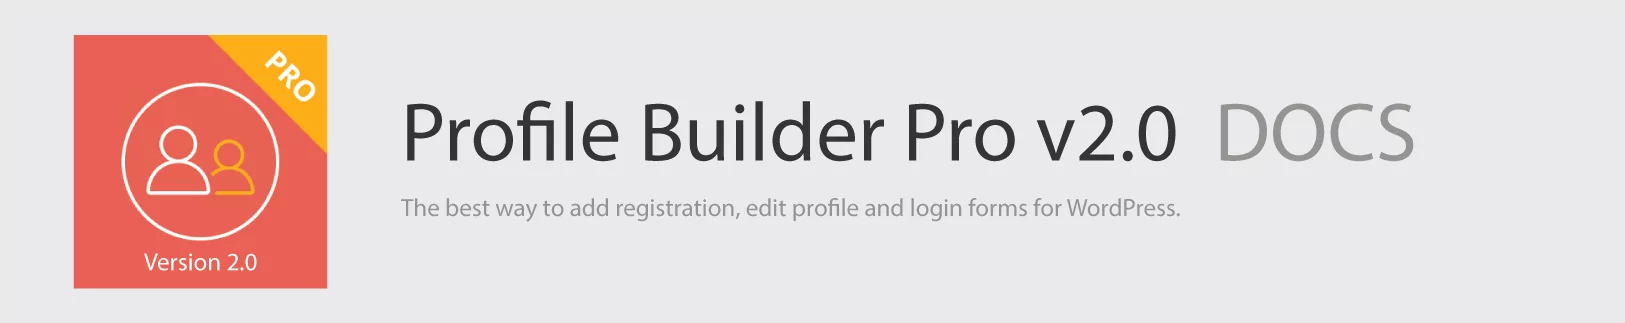 Profile Builder Docs Logo v2